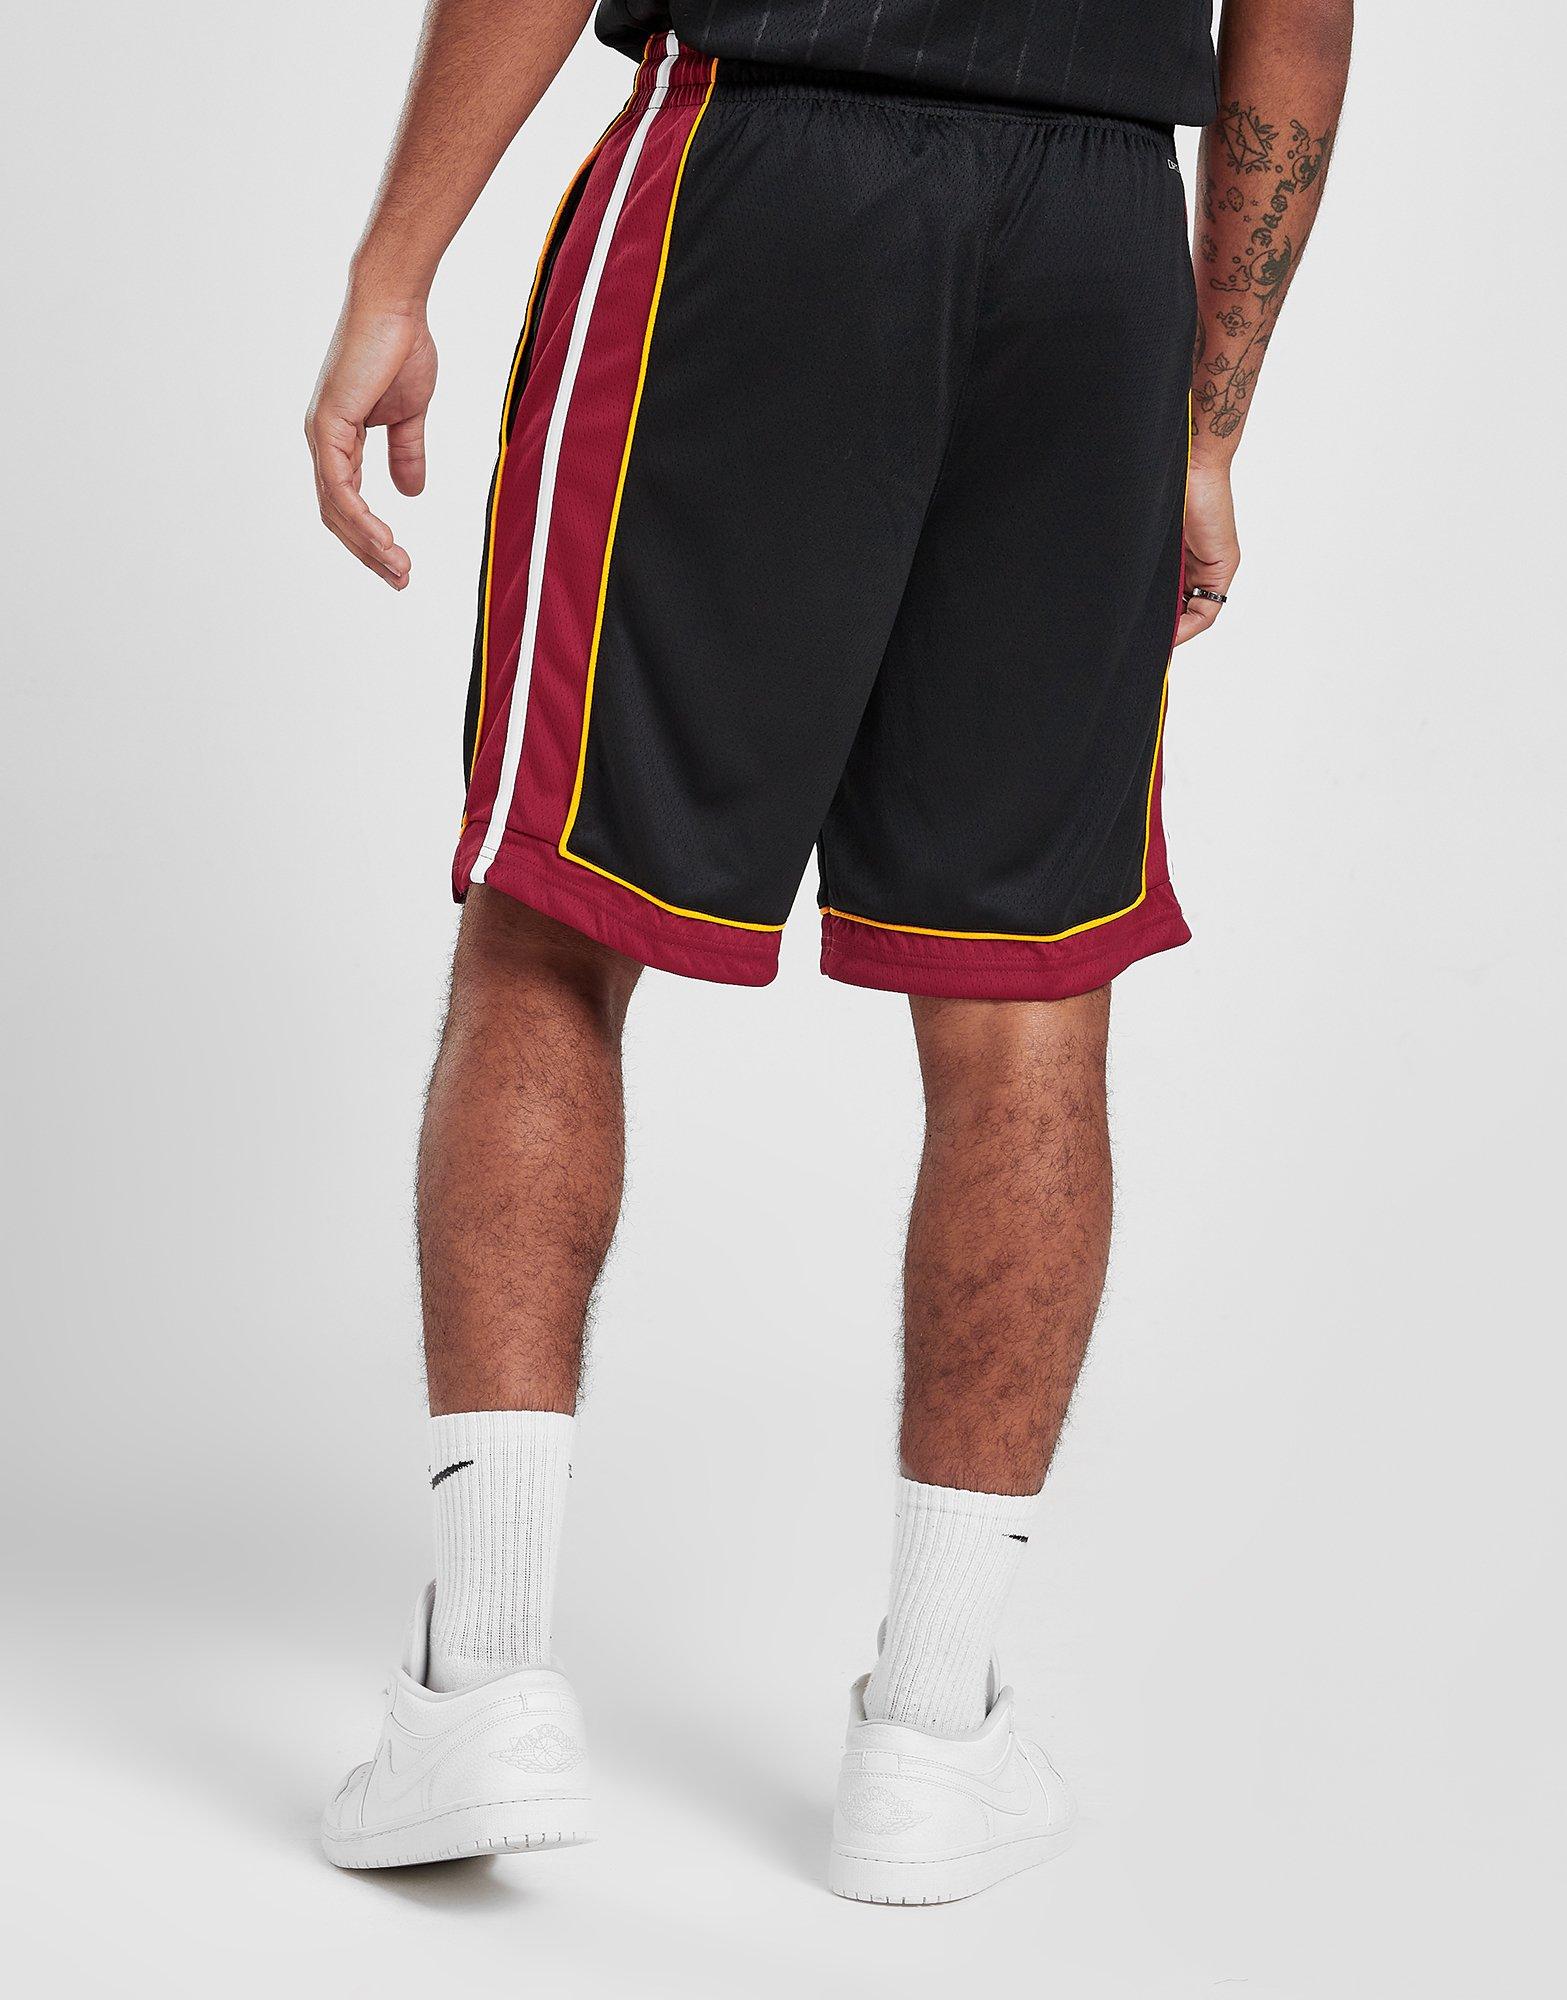 Nike NBA Miami Heat 2020 City Edition Swingman Performance Shorts Size 30  SMALL